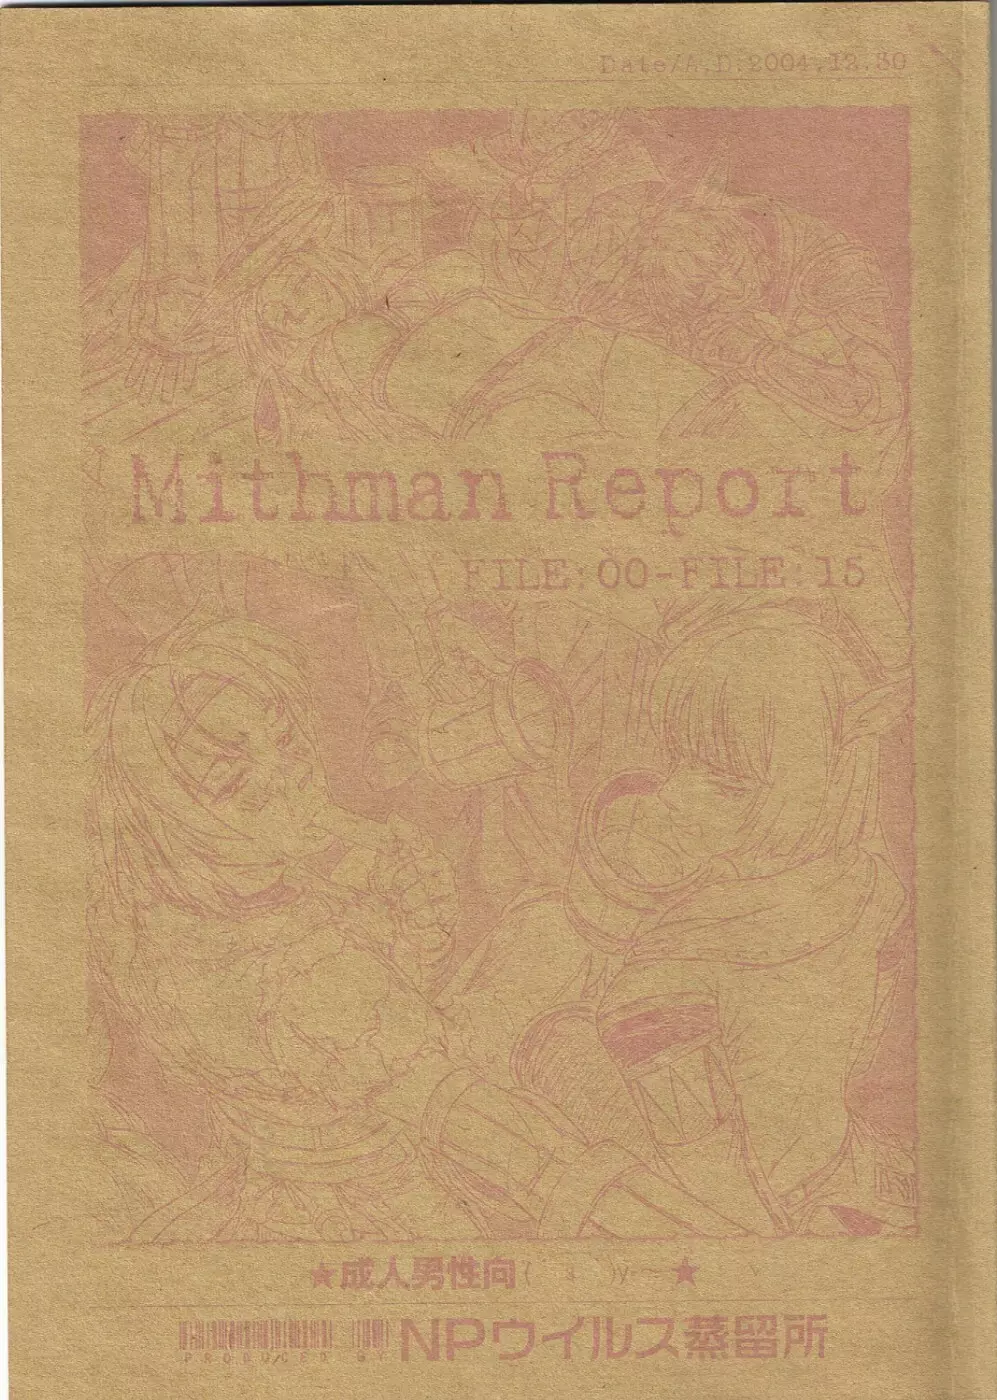 Mithman Report FILE:00-FILE:15 Page.1